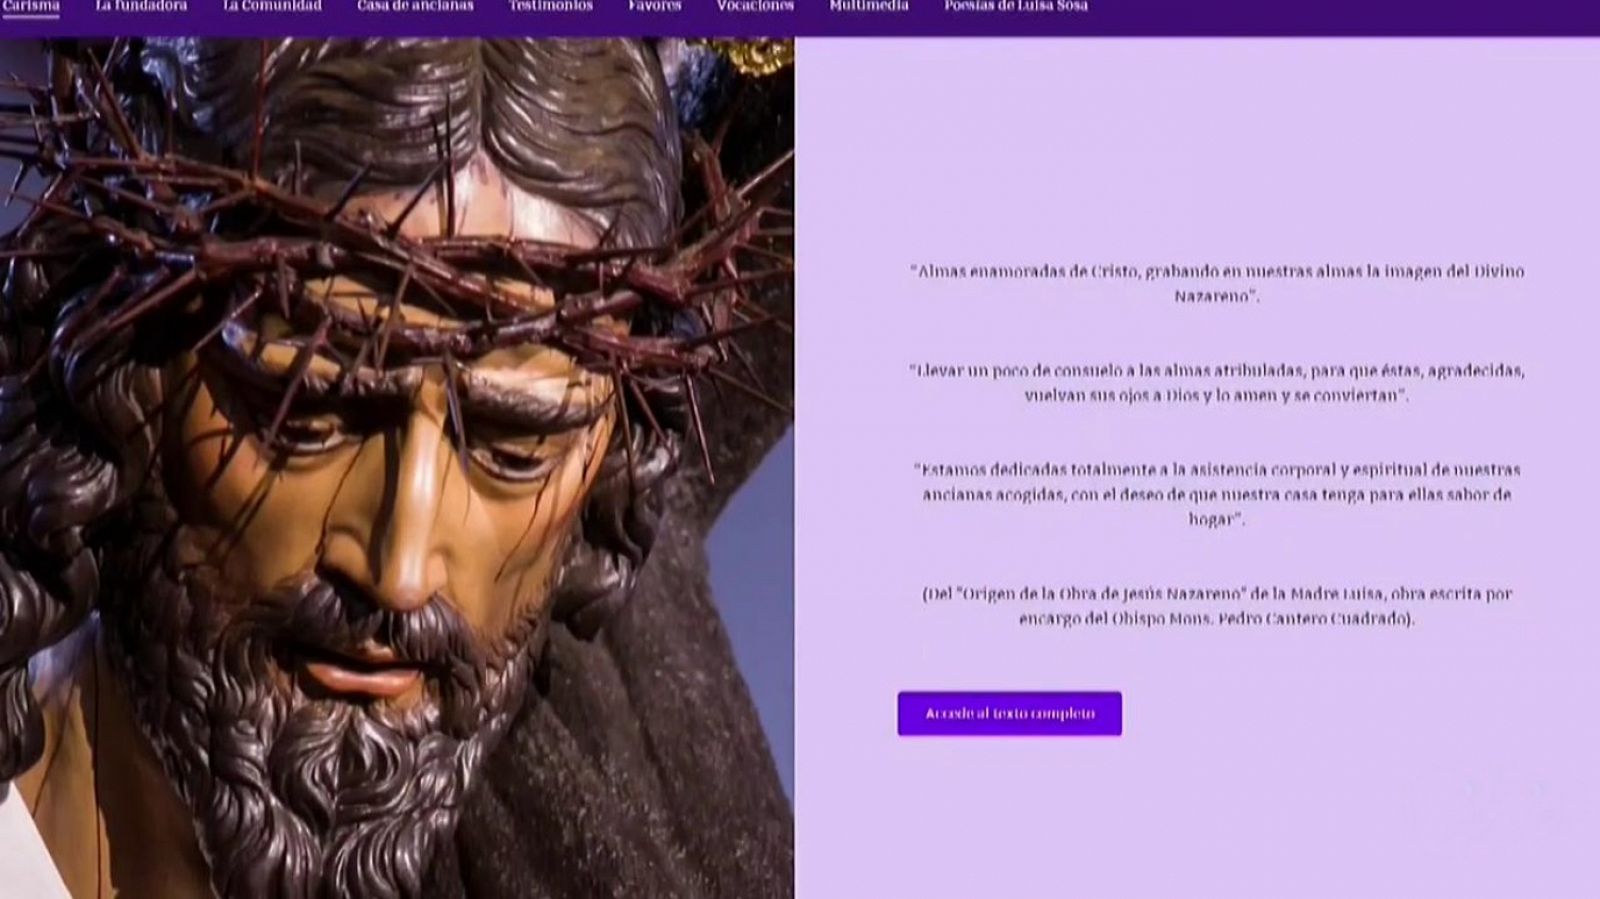 Testimonio - Sirviendo a todos en Jesús Nazareno - RTVE.es